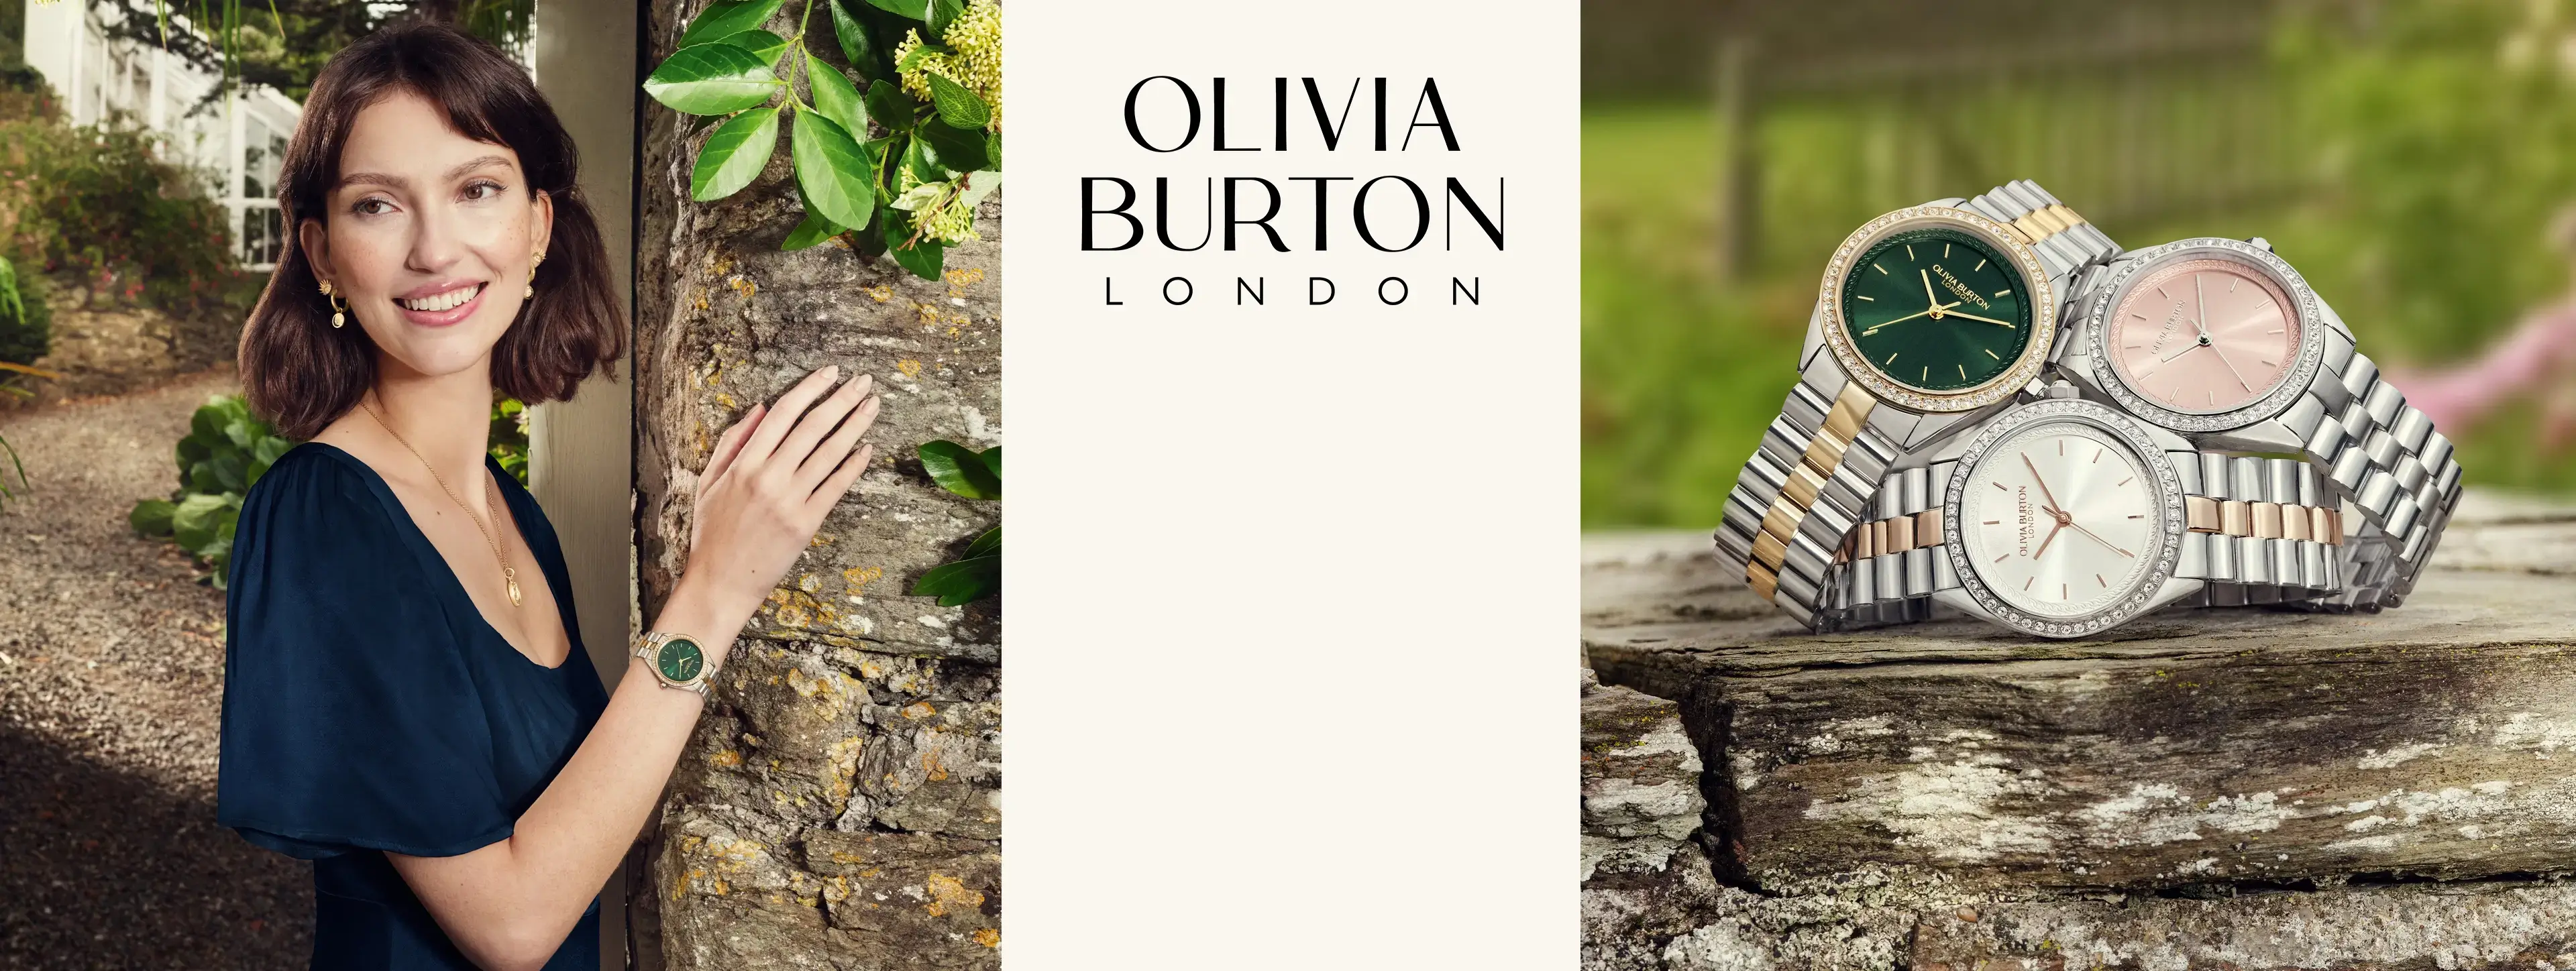 Buy Olivia burton Analog Silver Dial Women's Watch-24070004 at Amazon.in